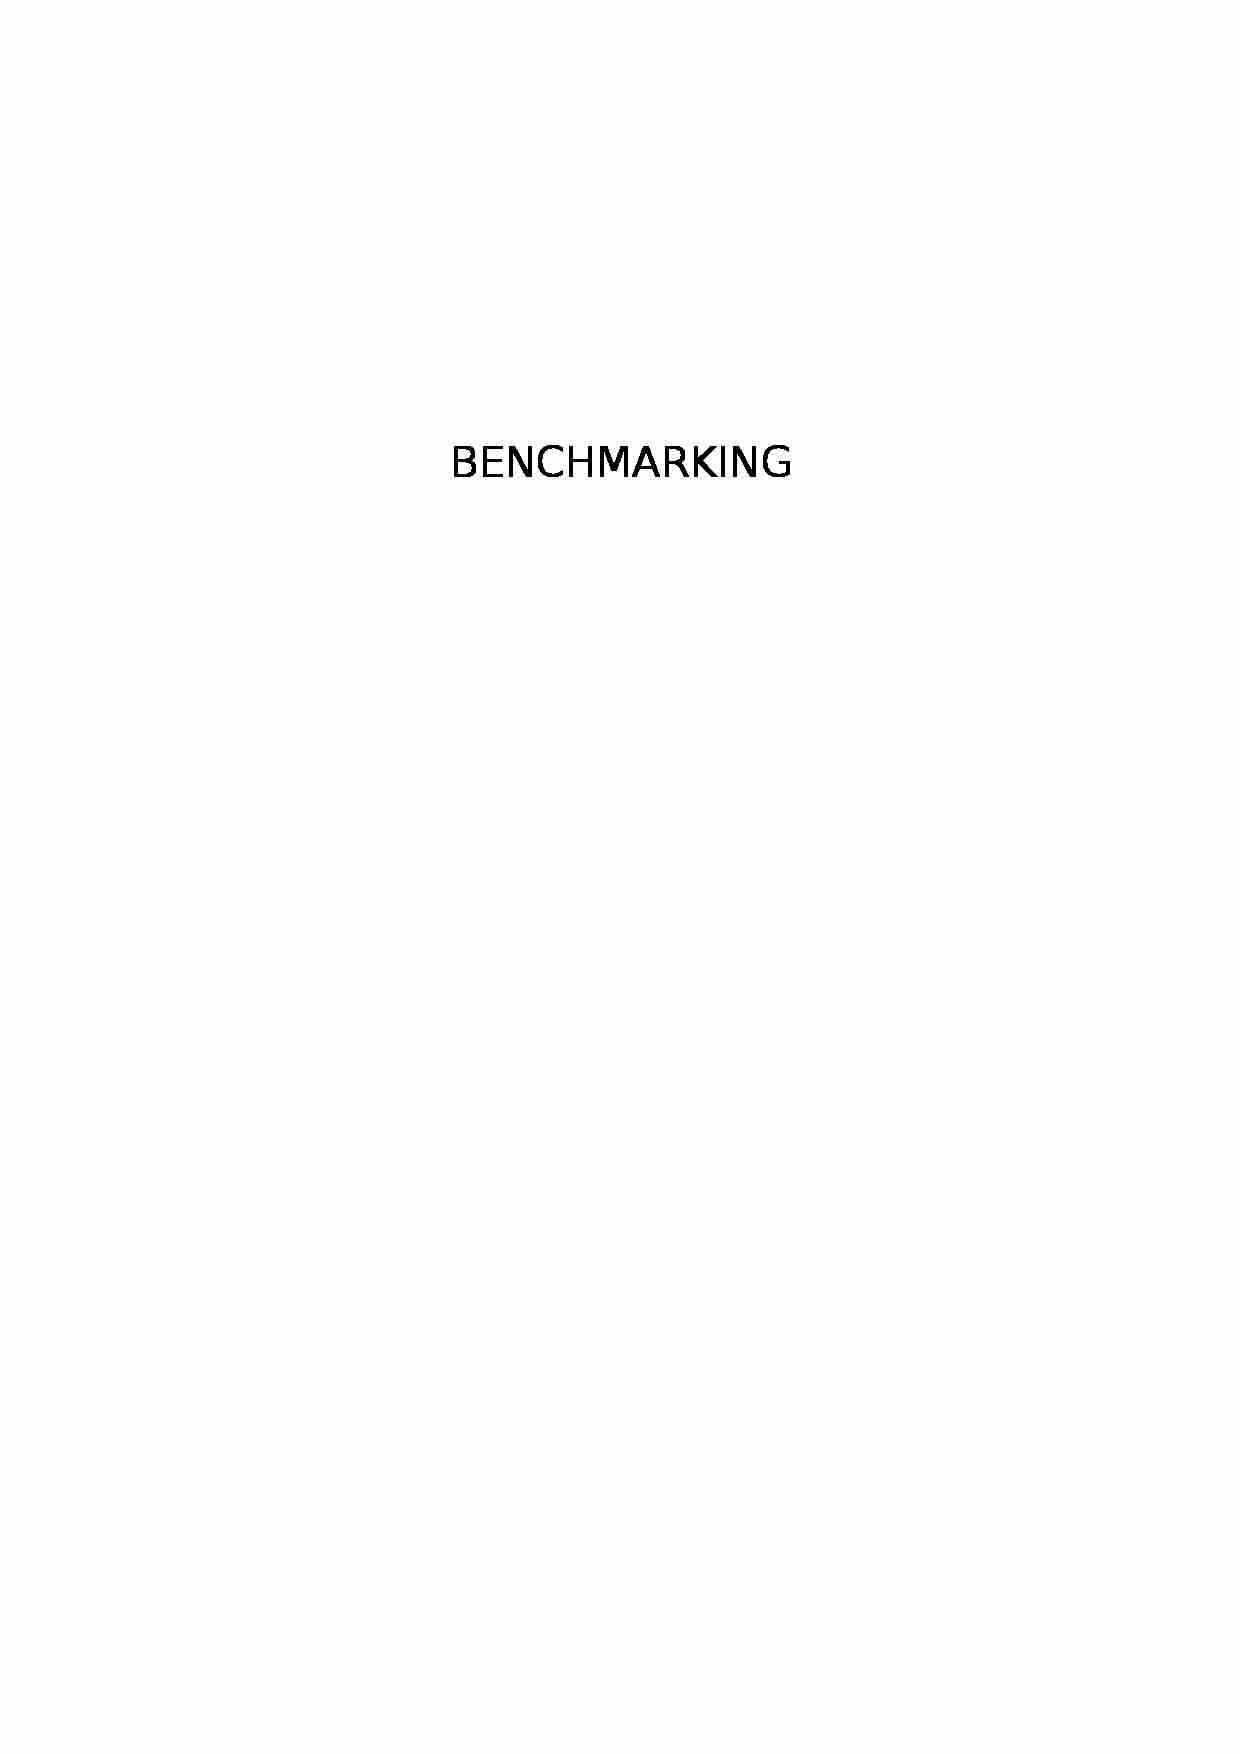 Benchmarking (2) - strona 1